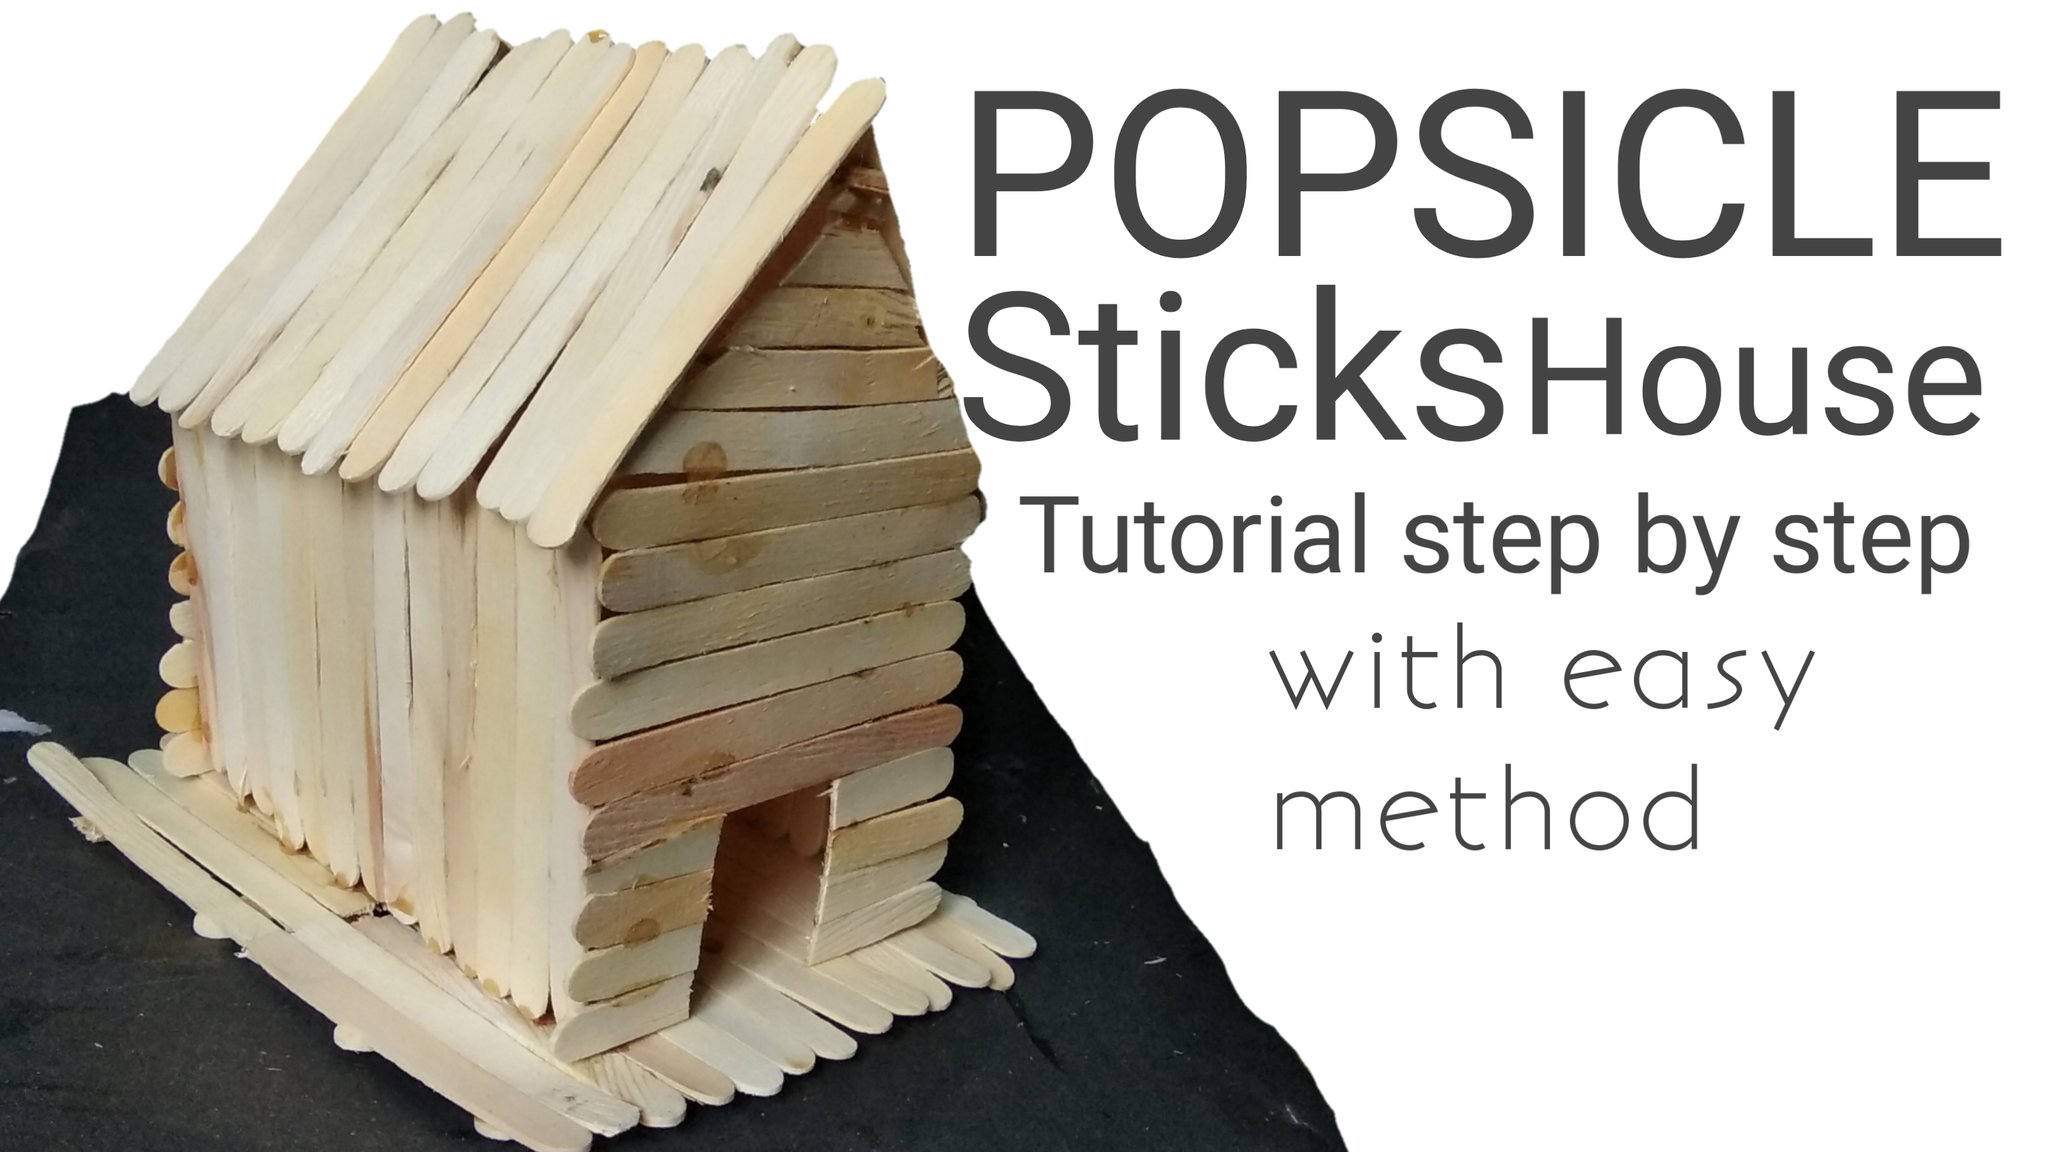 Art Of Rohit on X: Popsicle sticks house tutorial -   #art #DIY  / X